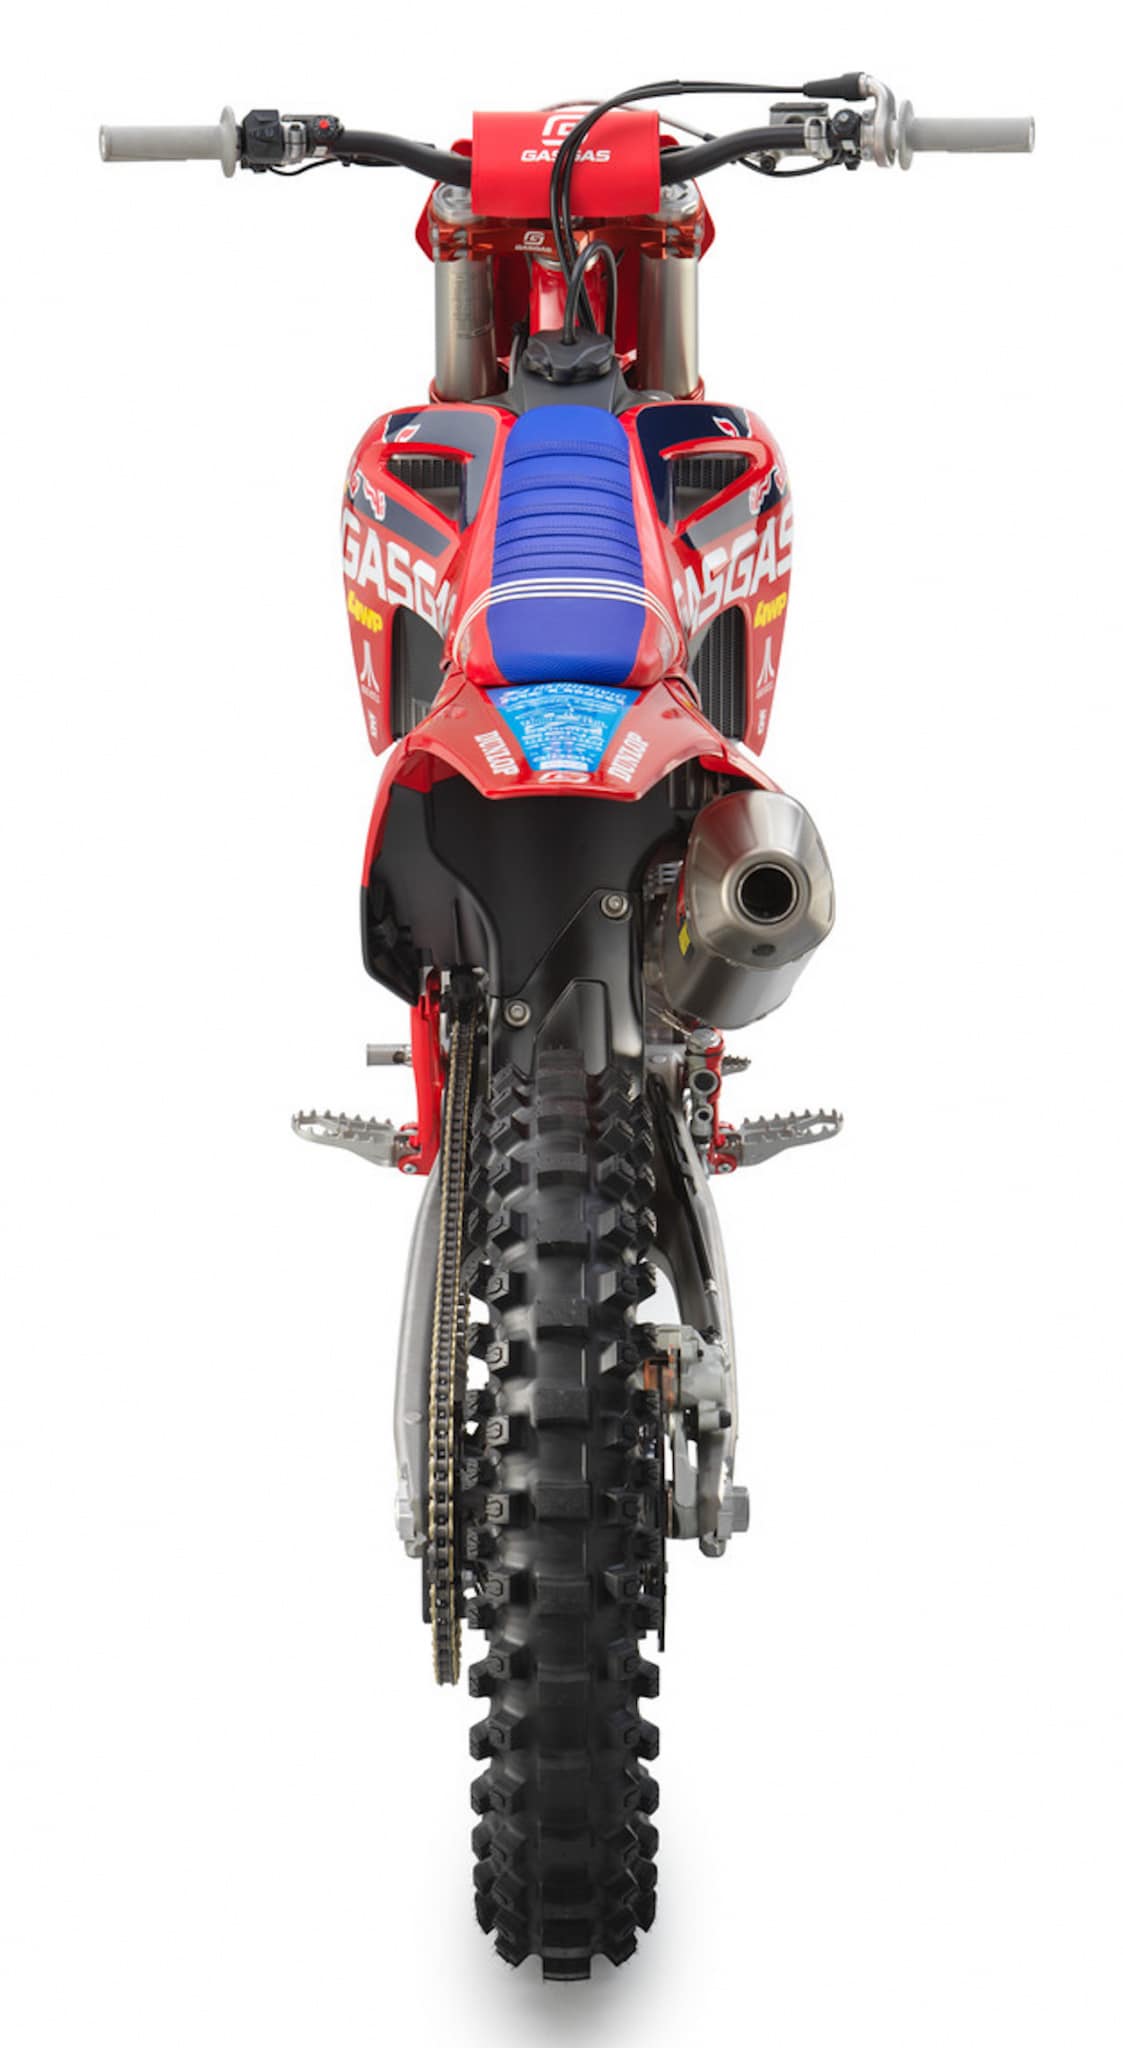 GASGAS MC 450F Troy Lee entwirft Motocross-Bike-6